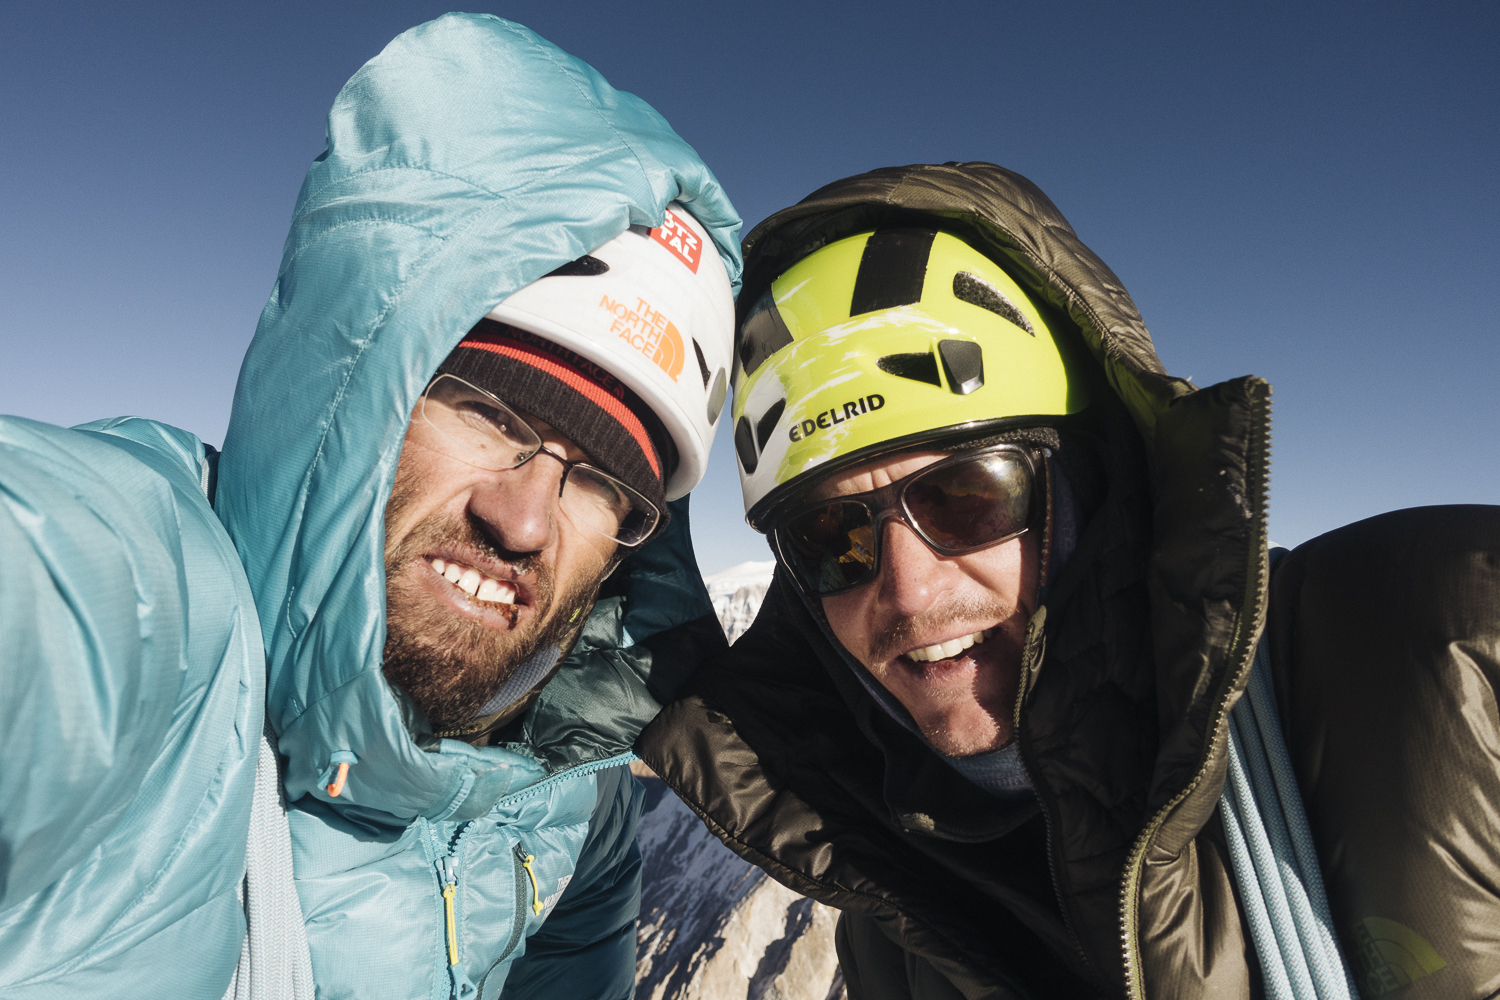 Summit shot with Auer, left, and Blumel. [Photo] Hansjorg Auer